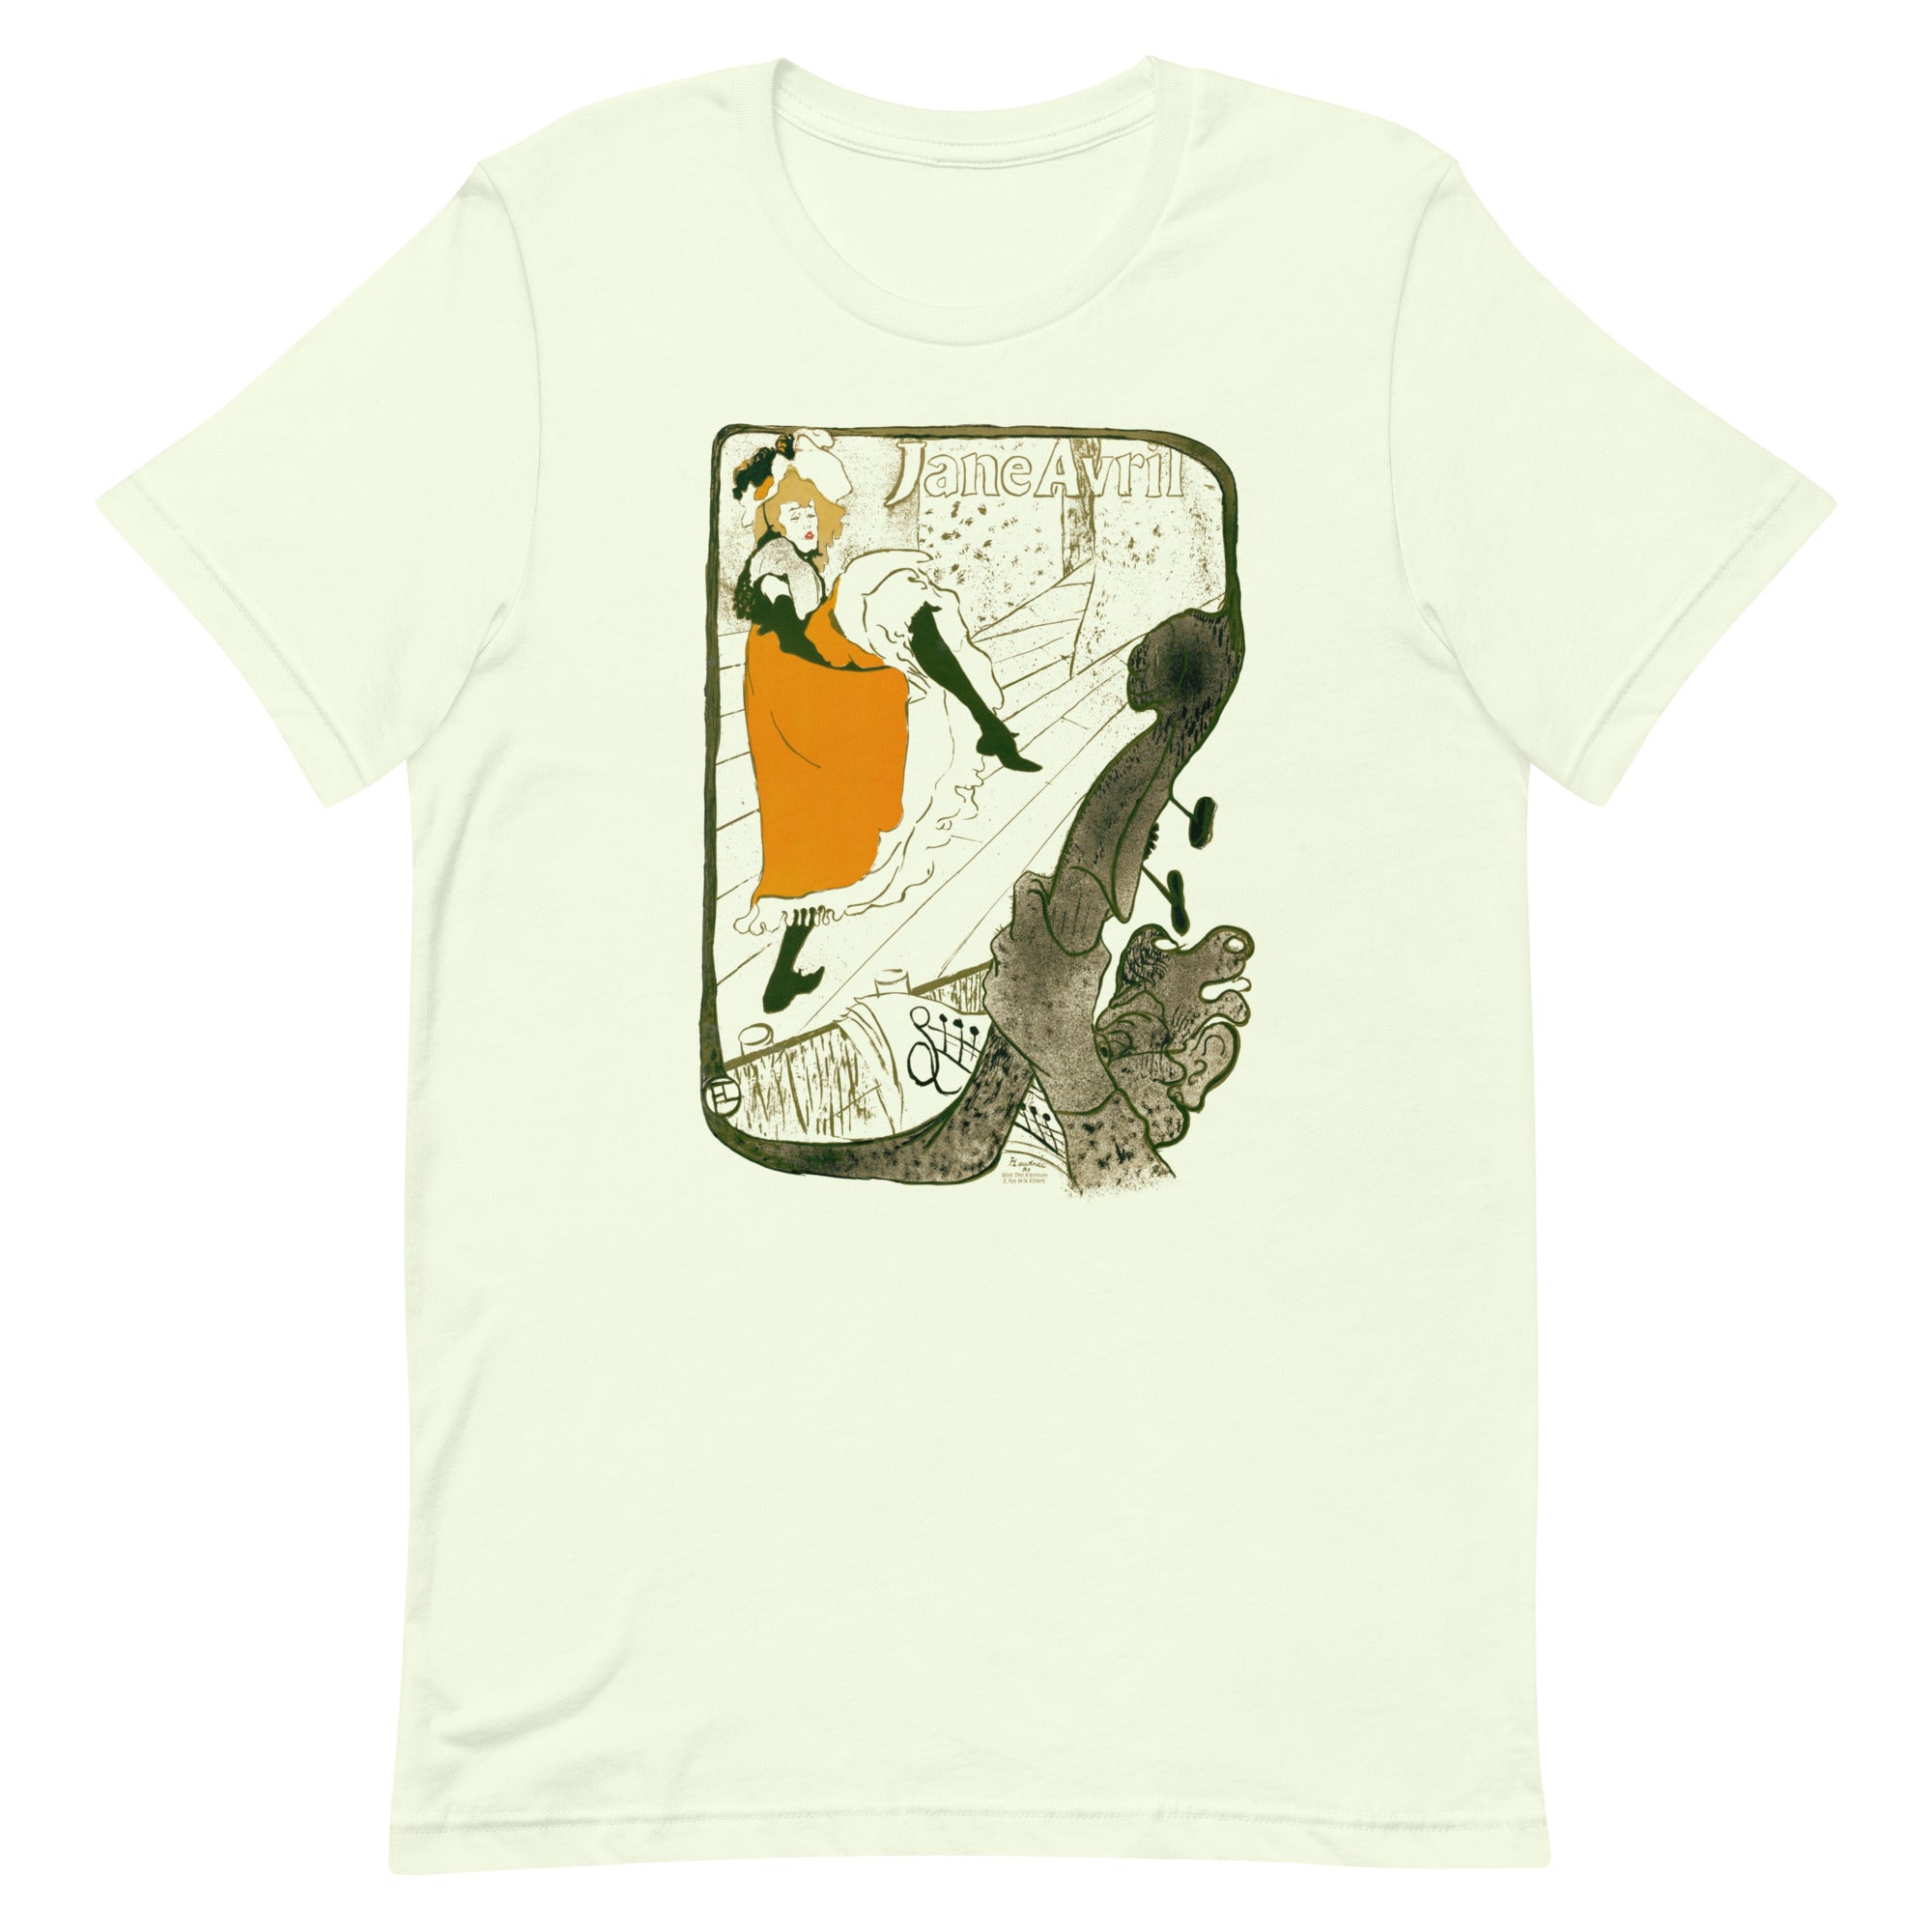 Jane Avril bailando. Toulouse-Lautrec. Gráfico vintage, camiseta unisex